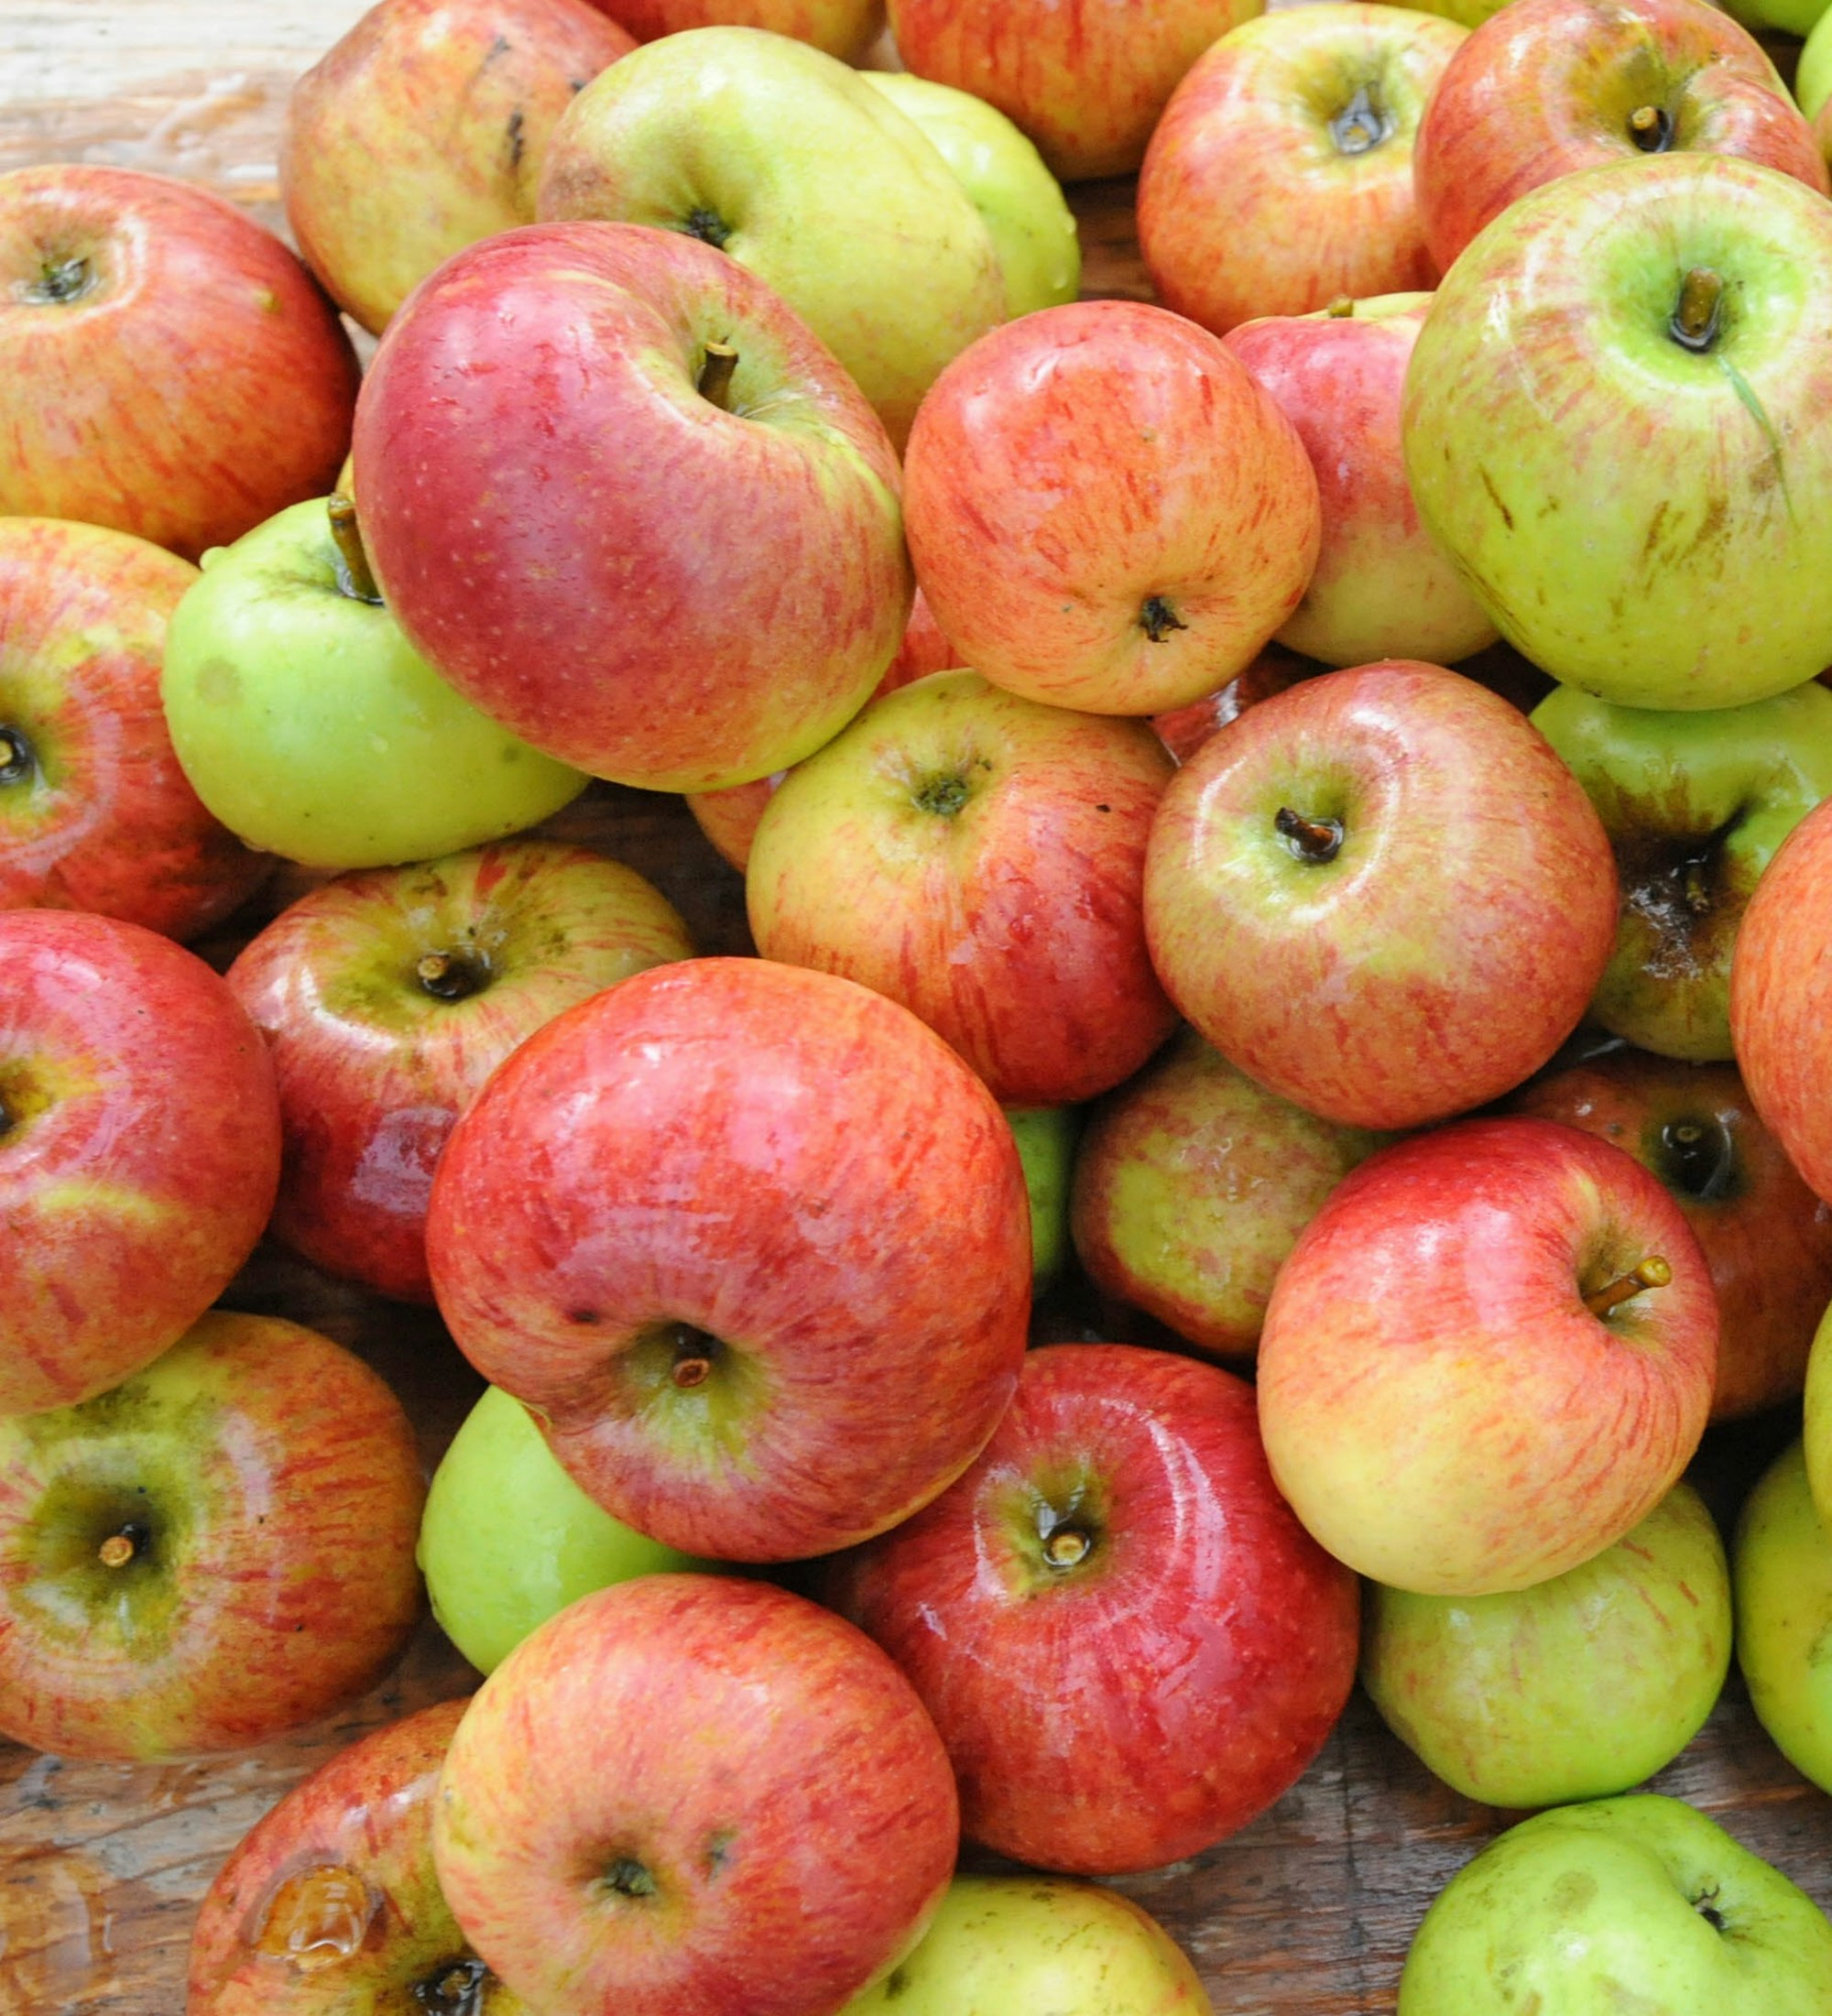 Die Kinder verarbeiteten mehrere hundert Äpfel.